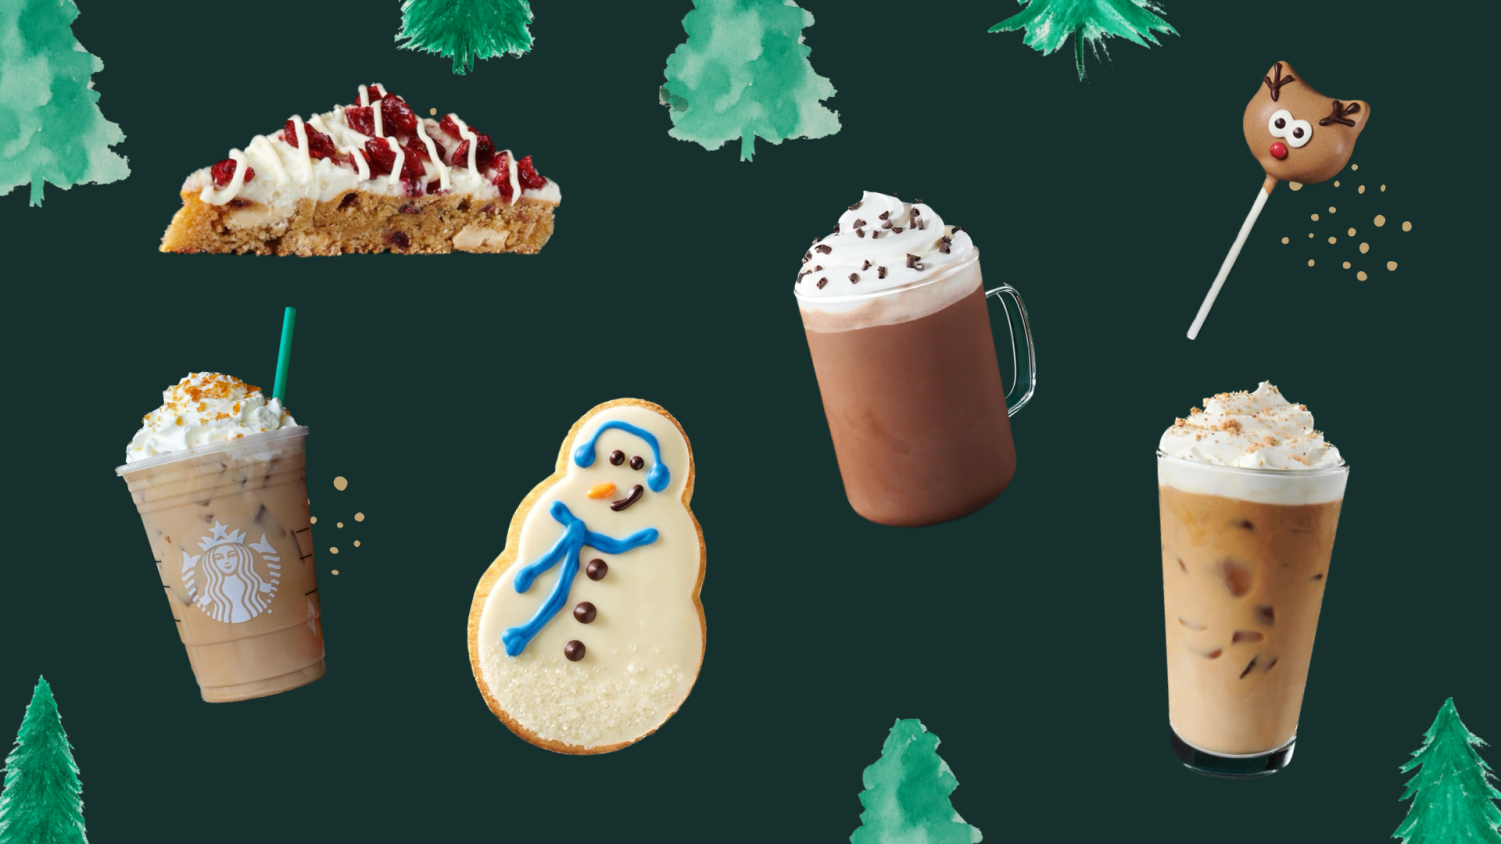 AmadorValleyToday  Food Review: Starbucks Christmas Menu proves